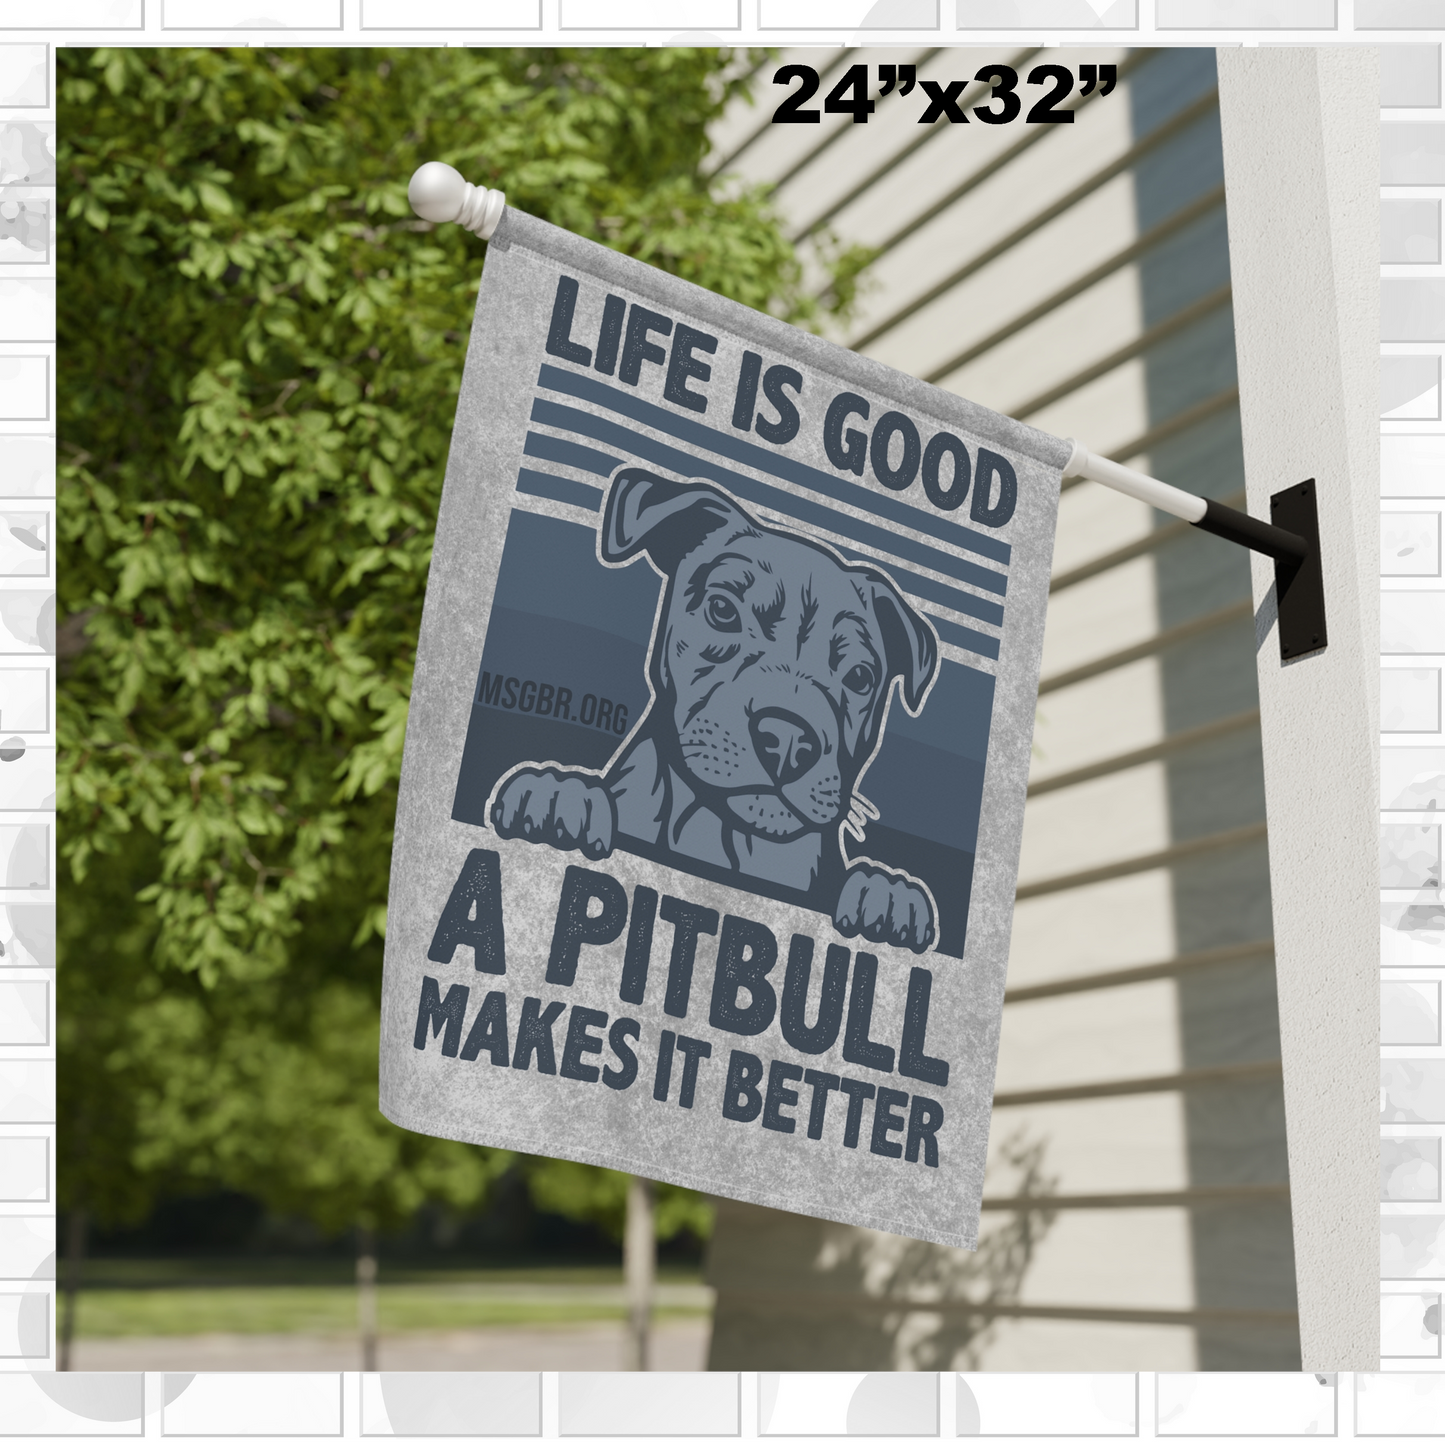 MSGBR Bully Rescue Pitbull Dog Breed Life Is Good ... Pitbull Makes It Better Garden / House Flag